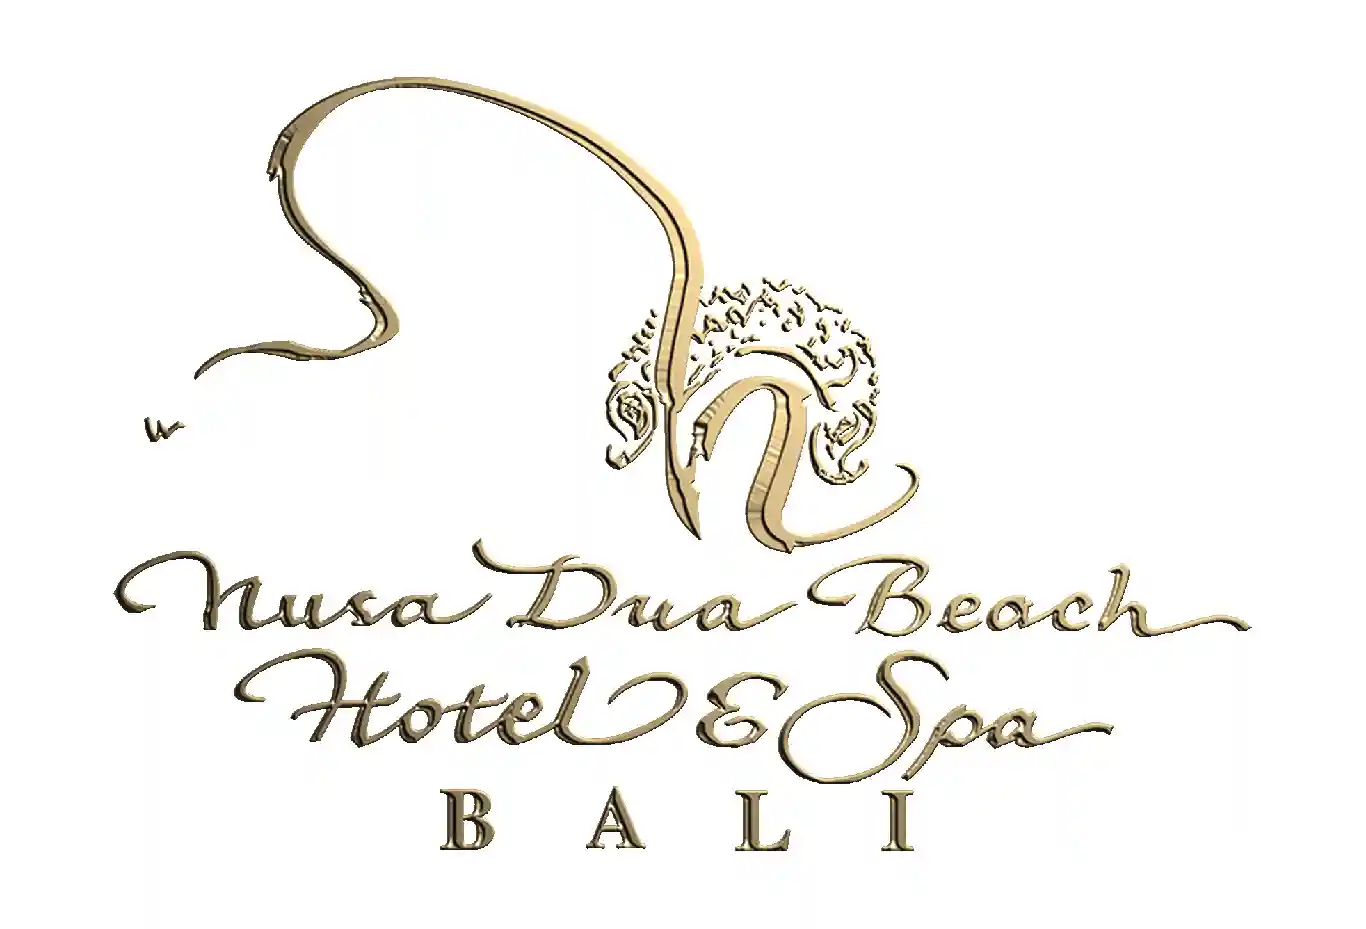 Nusa Dua Hotel